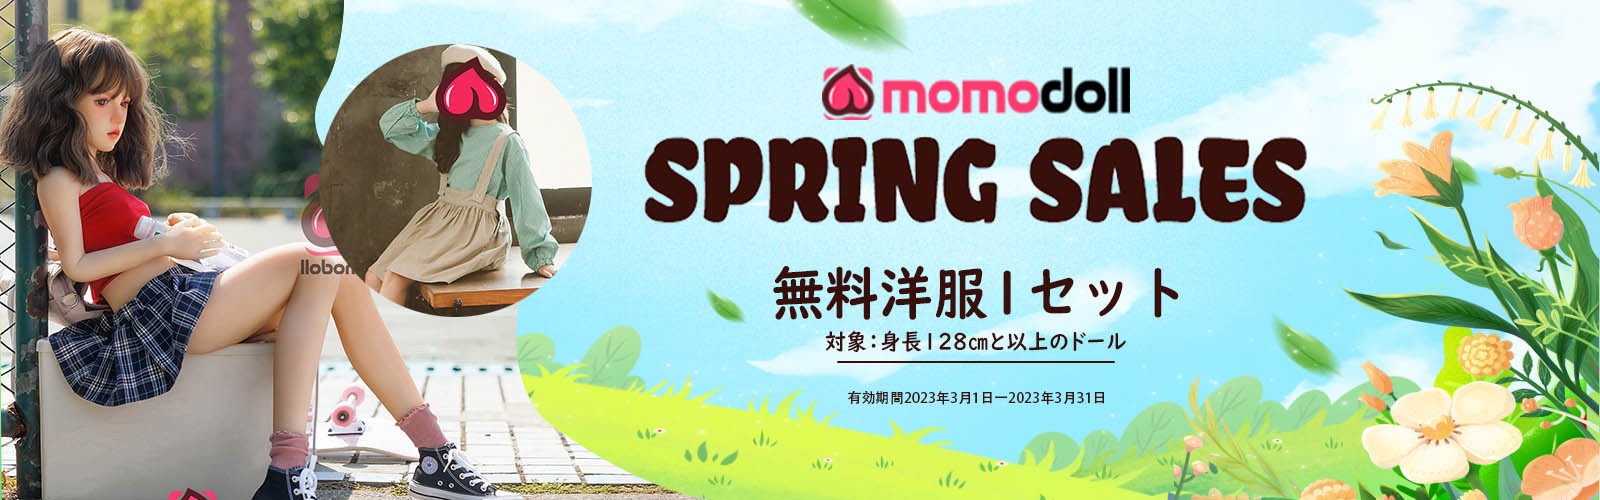 Momodoll春の特売